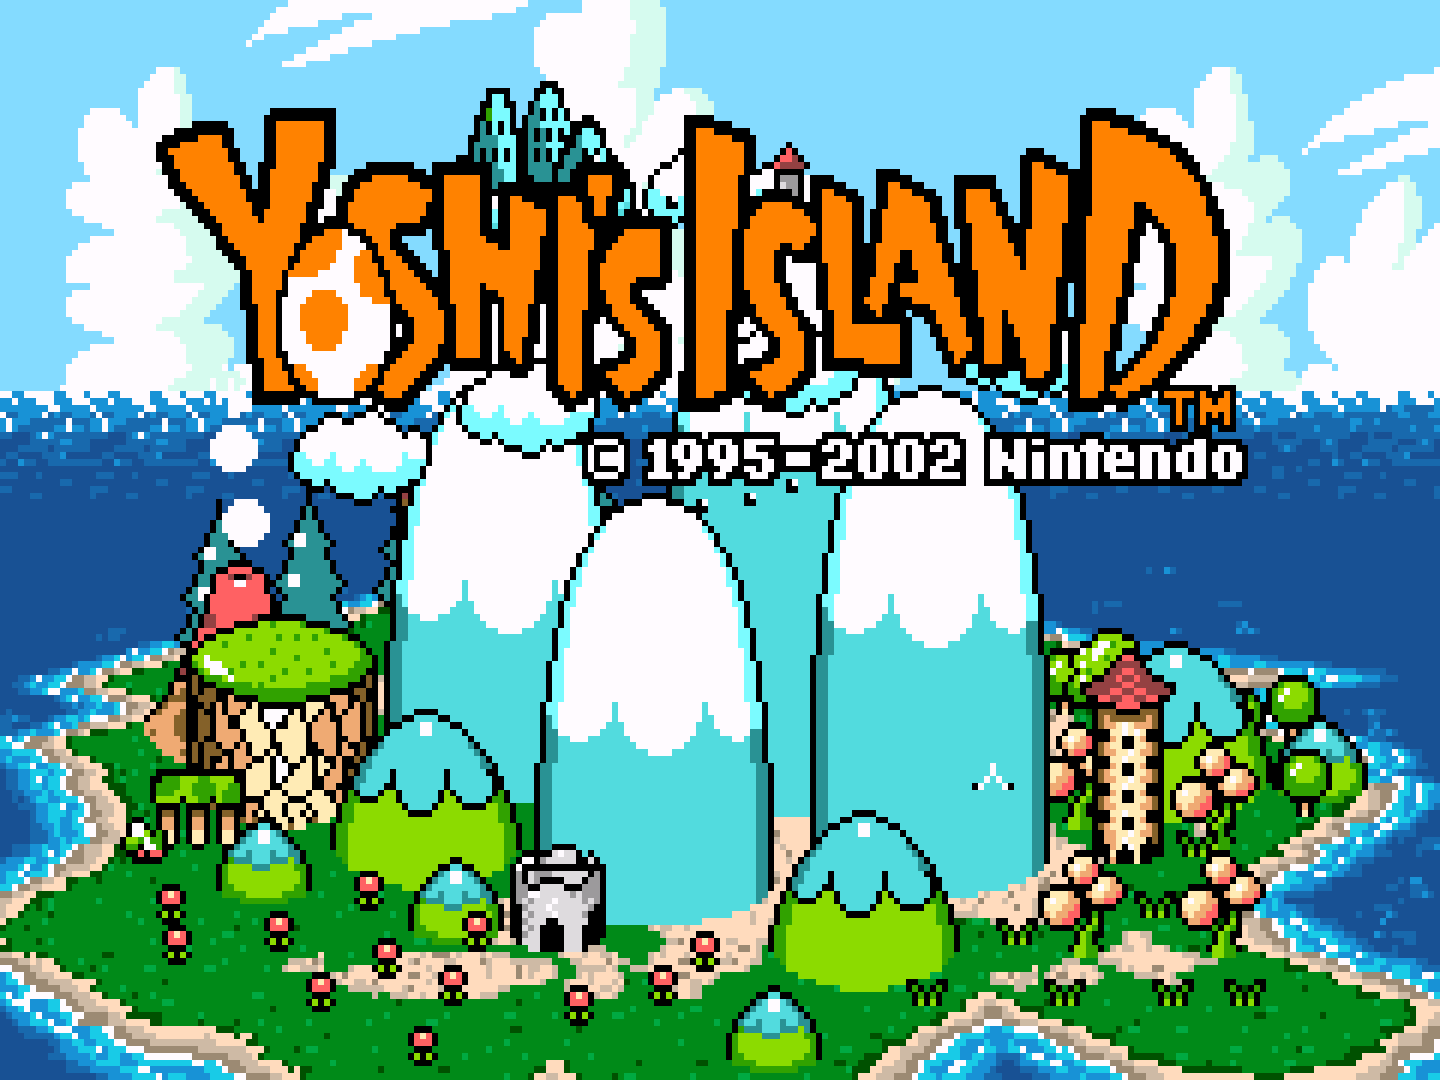 Super Mario Advance 3 - Yoshi's Island Pics, Video Game Collection